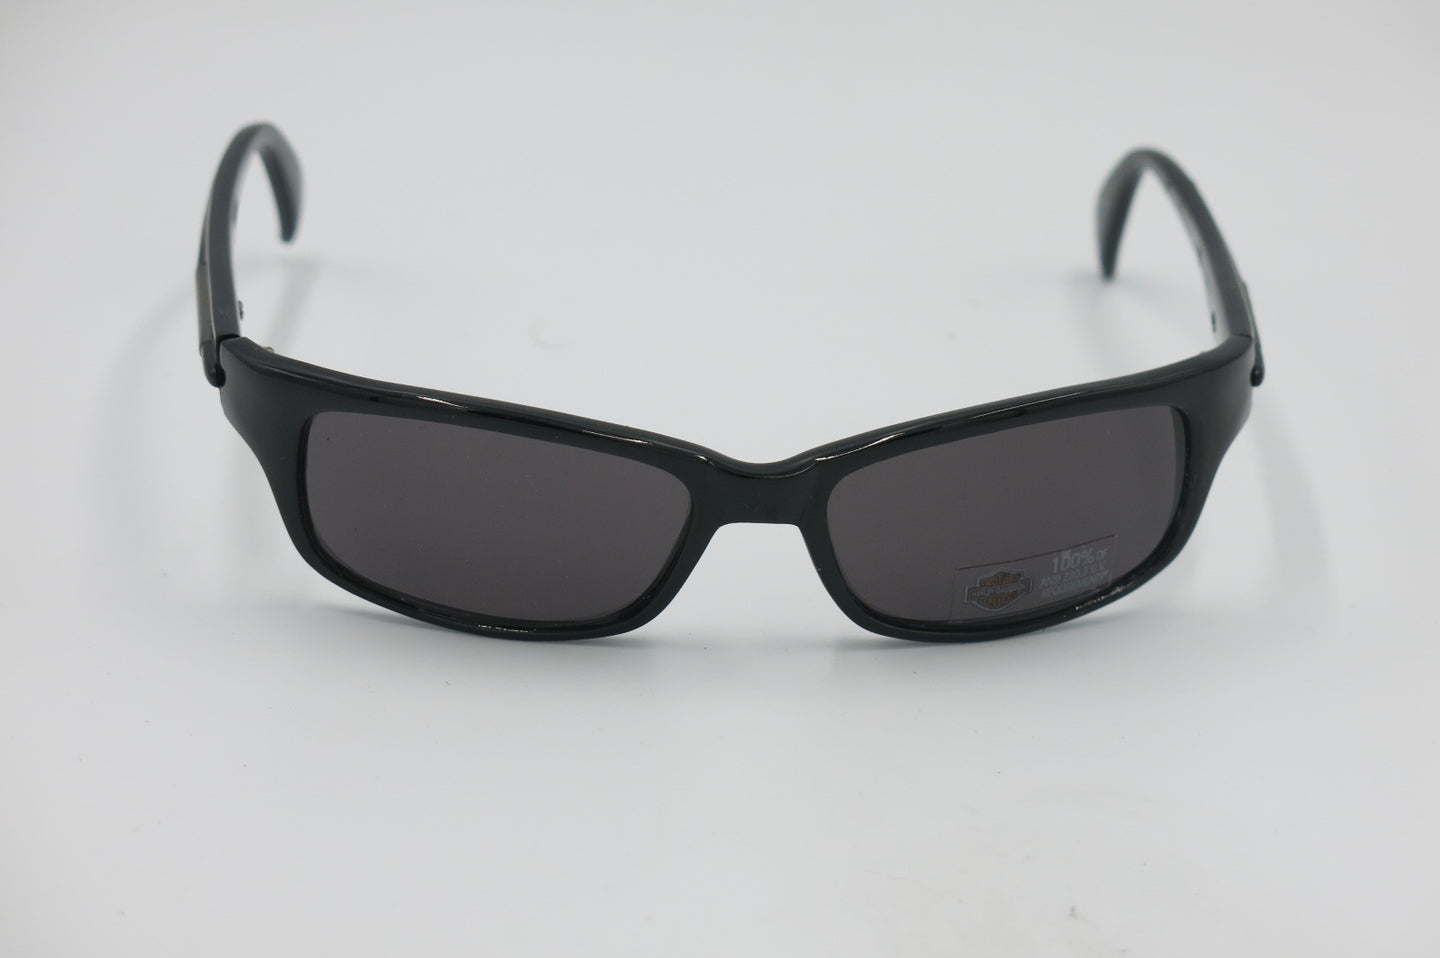 Harley Davidson Sunglasses - 332